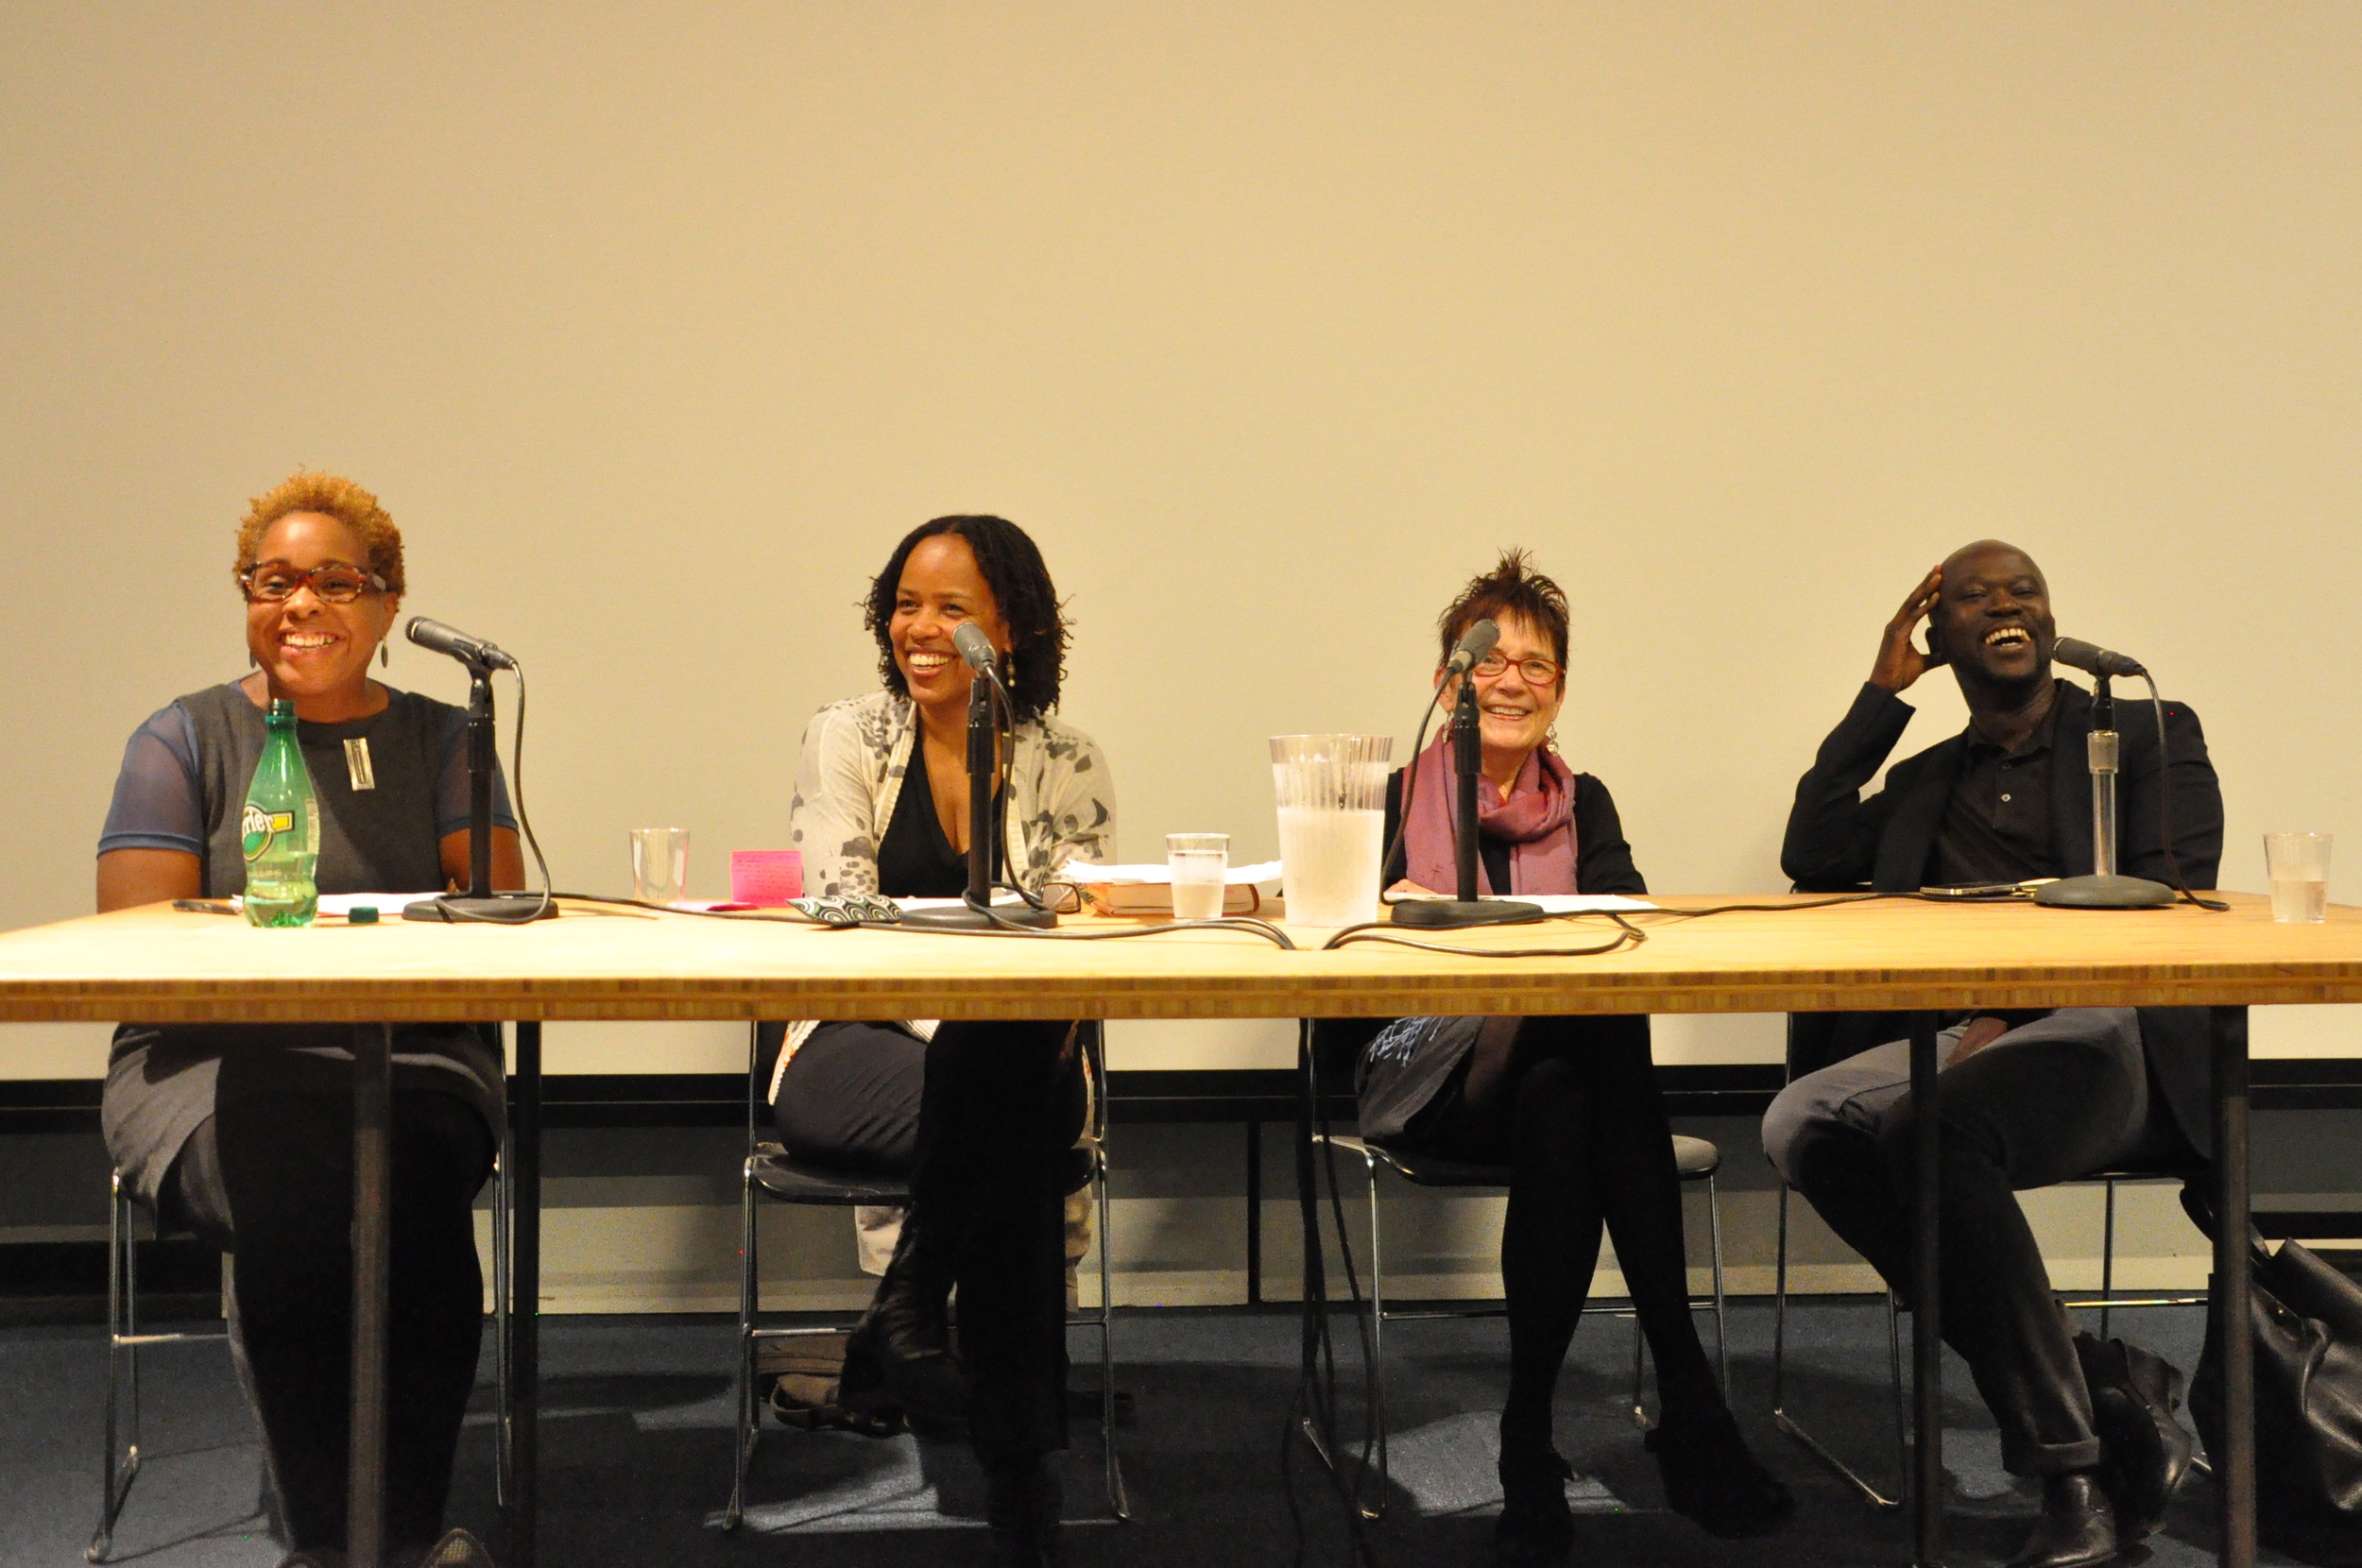  Mabel O. Wilson, Saidiya Hartman, Gwendolyn Wright, and David Adjaye discuss Wilson’s book  Negro Building: Black Americans in the World of Fairs and Museums . October 1, 2012, Wood Auditorium, Columbia University.  